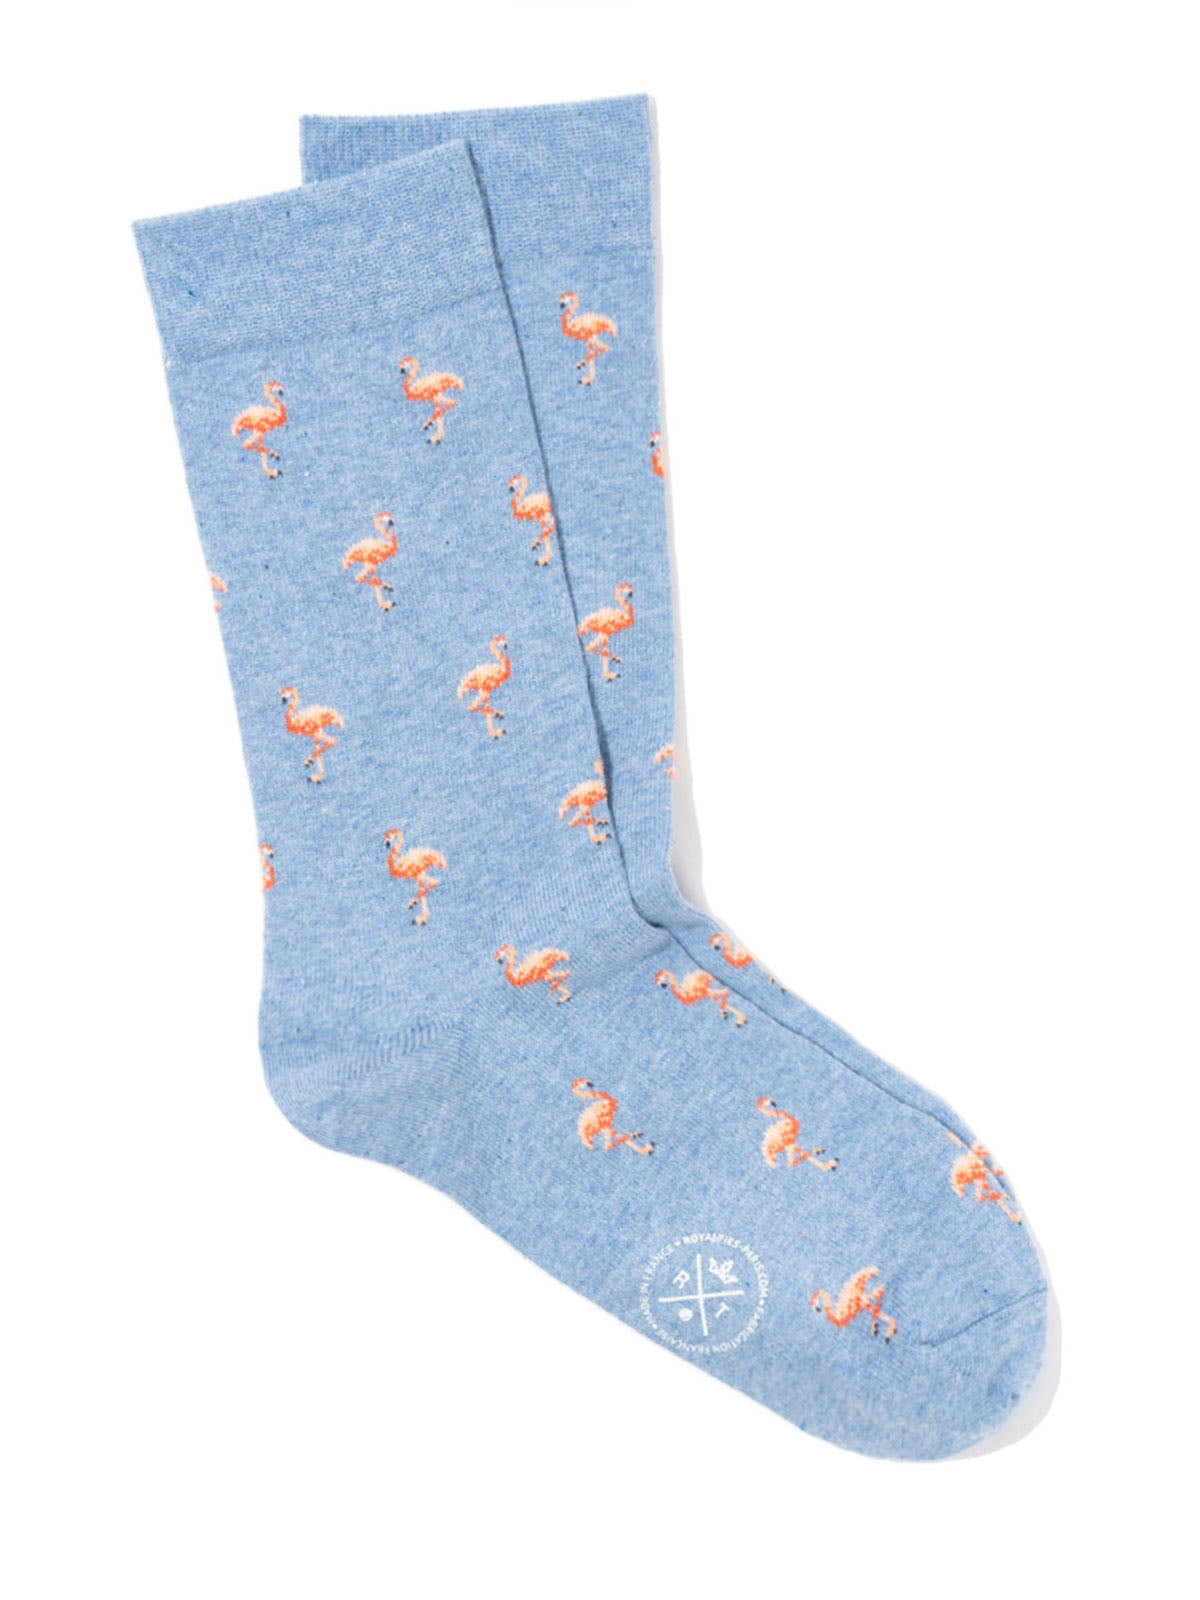 Flamingo Socks - Ciel